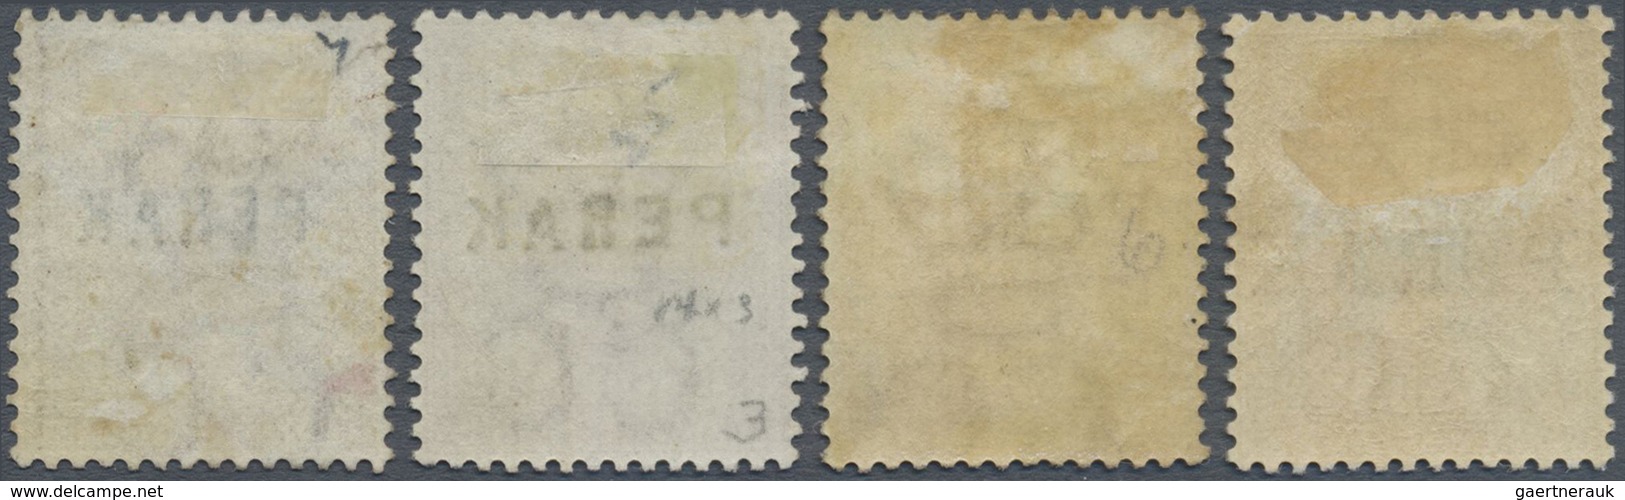 * Malaiische Staaten - Perak: 1880/1881, Straits Settlements QV 2c. Brown Wmkd. Crown CC Four Stamps W - Perak